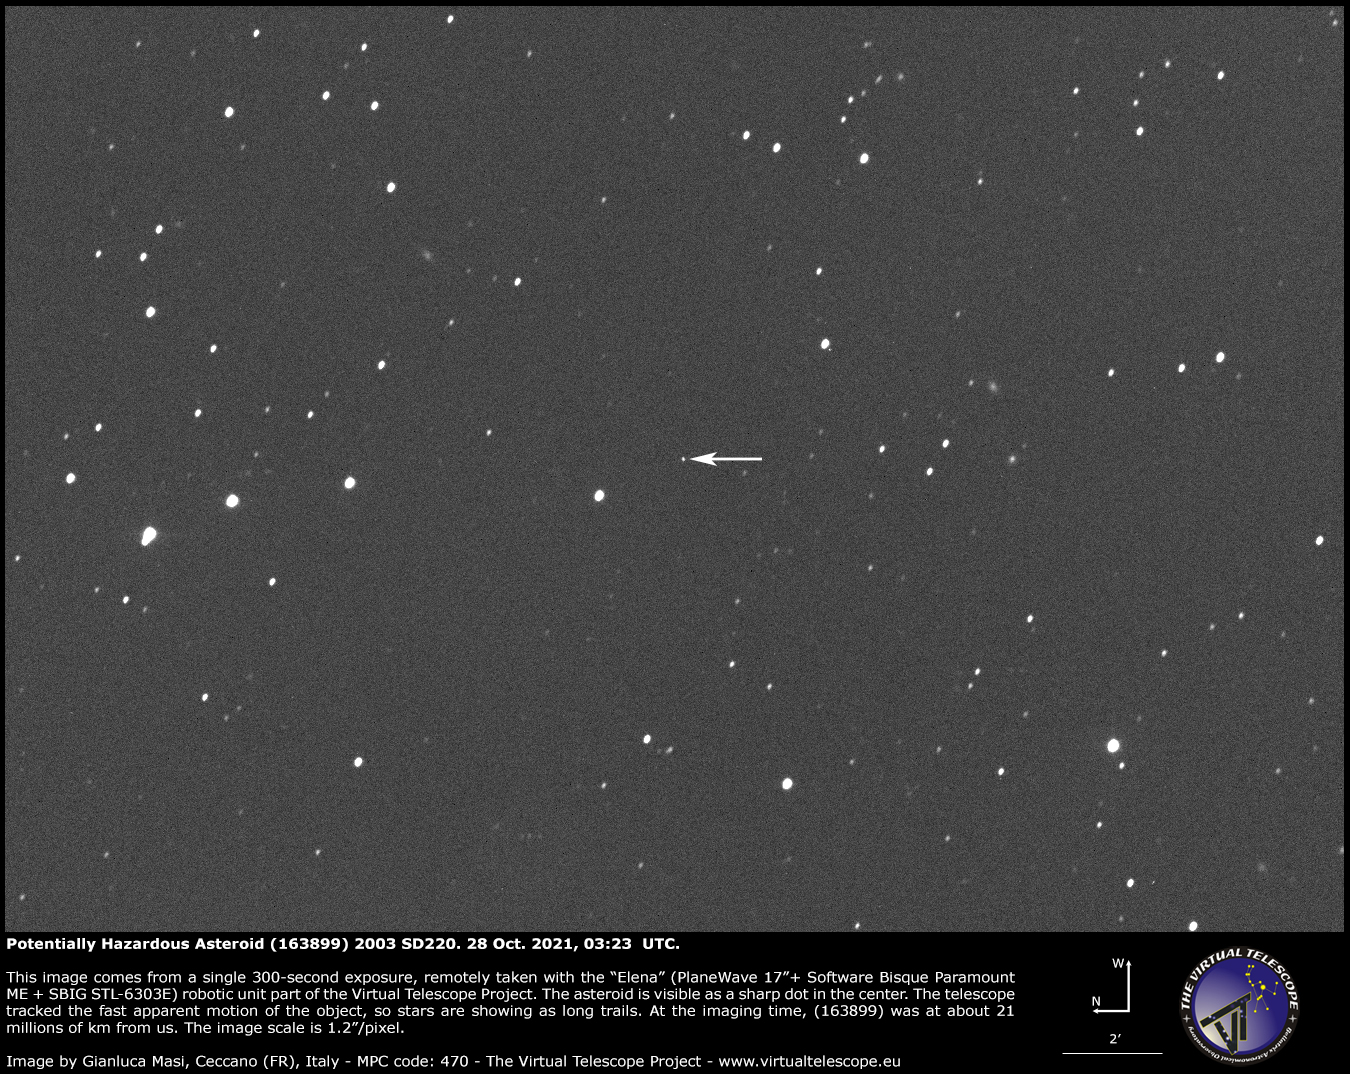 Potentially Hazardous Asteroid (163899) 2003 SD220: 28 Oct. 2021.